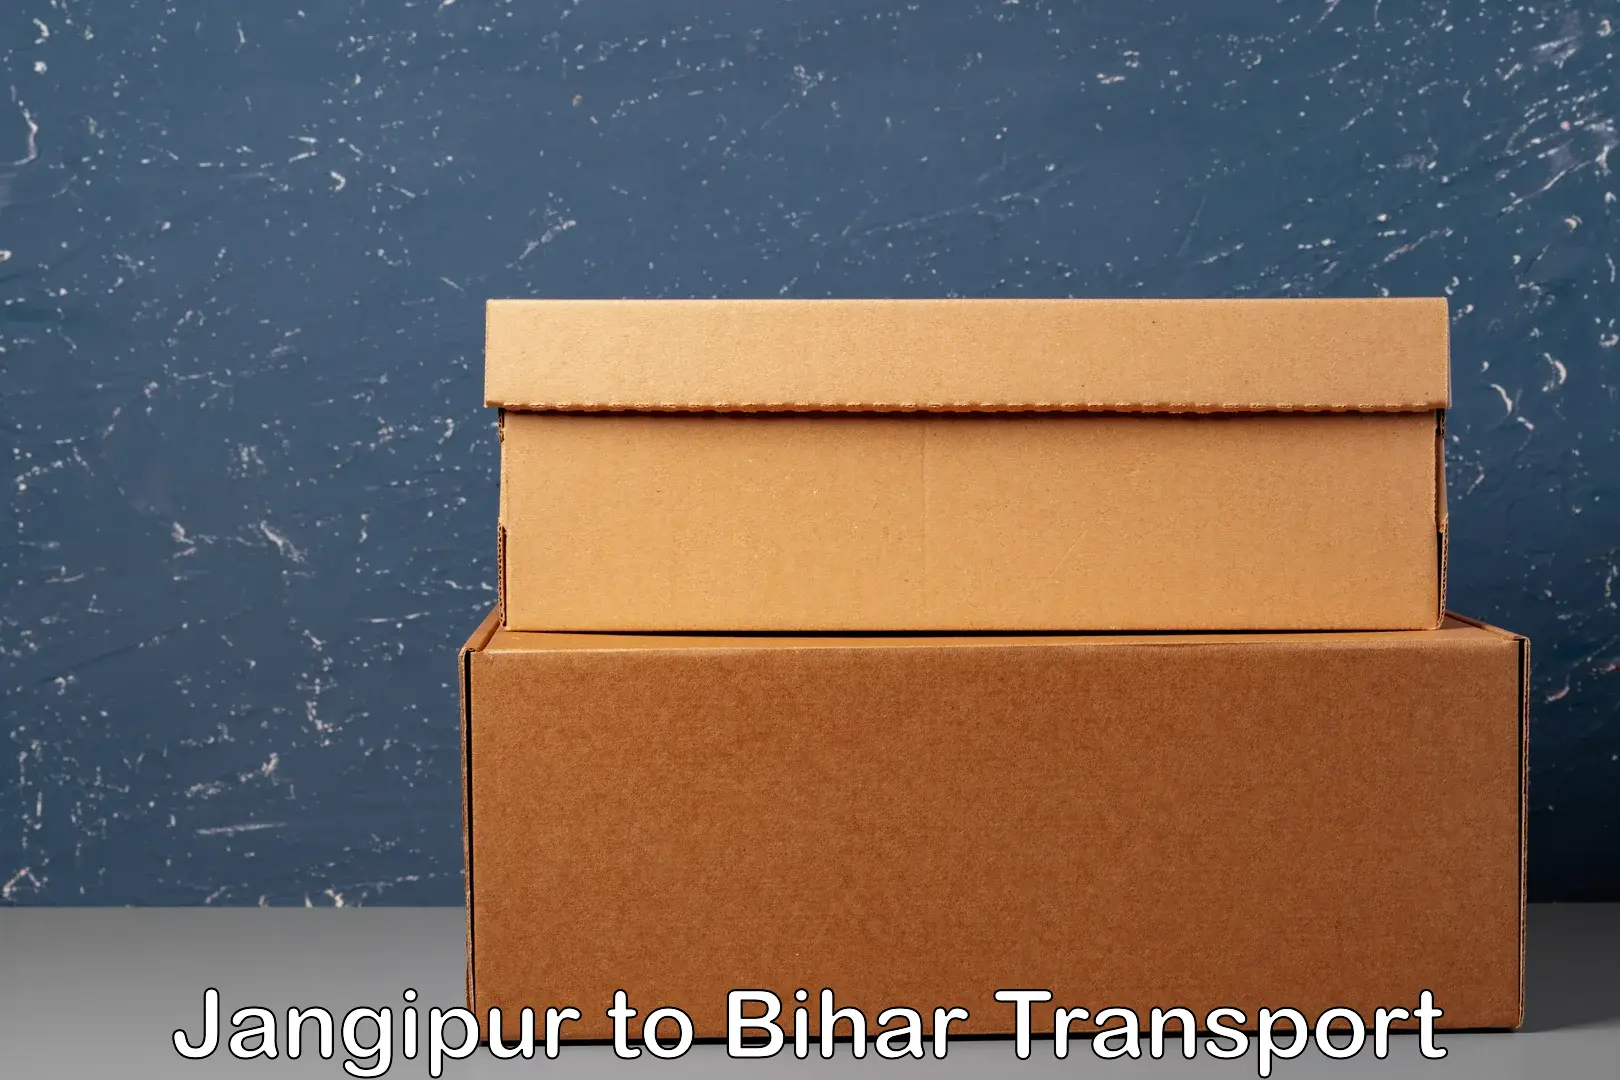 Shipping partner Jangipur to Khodaganj